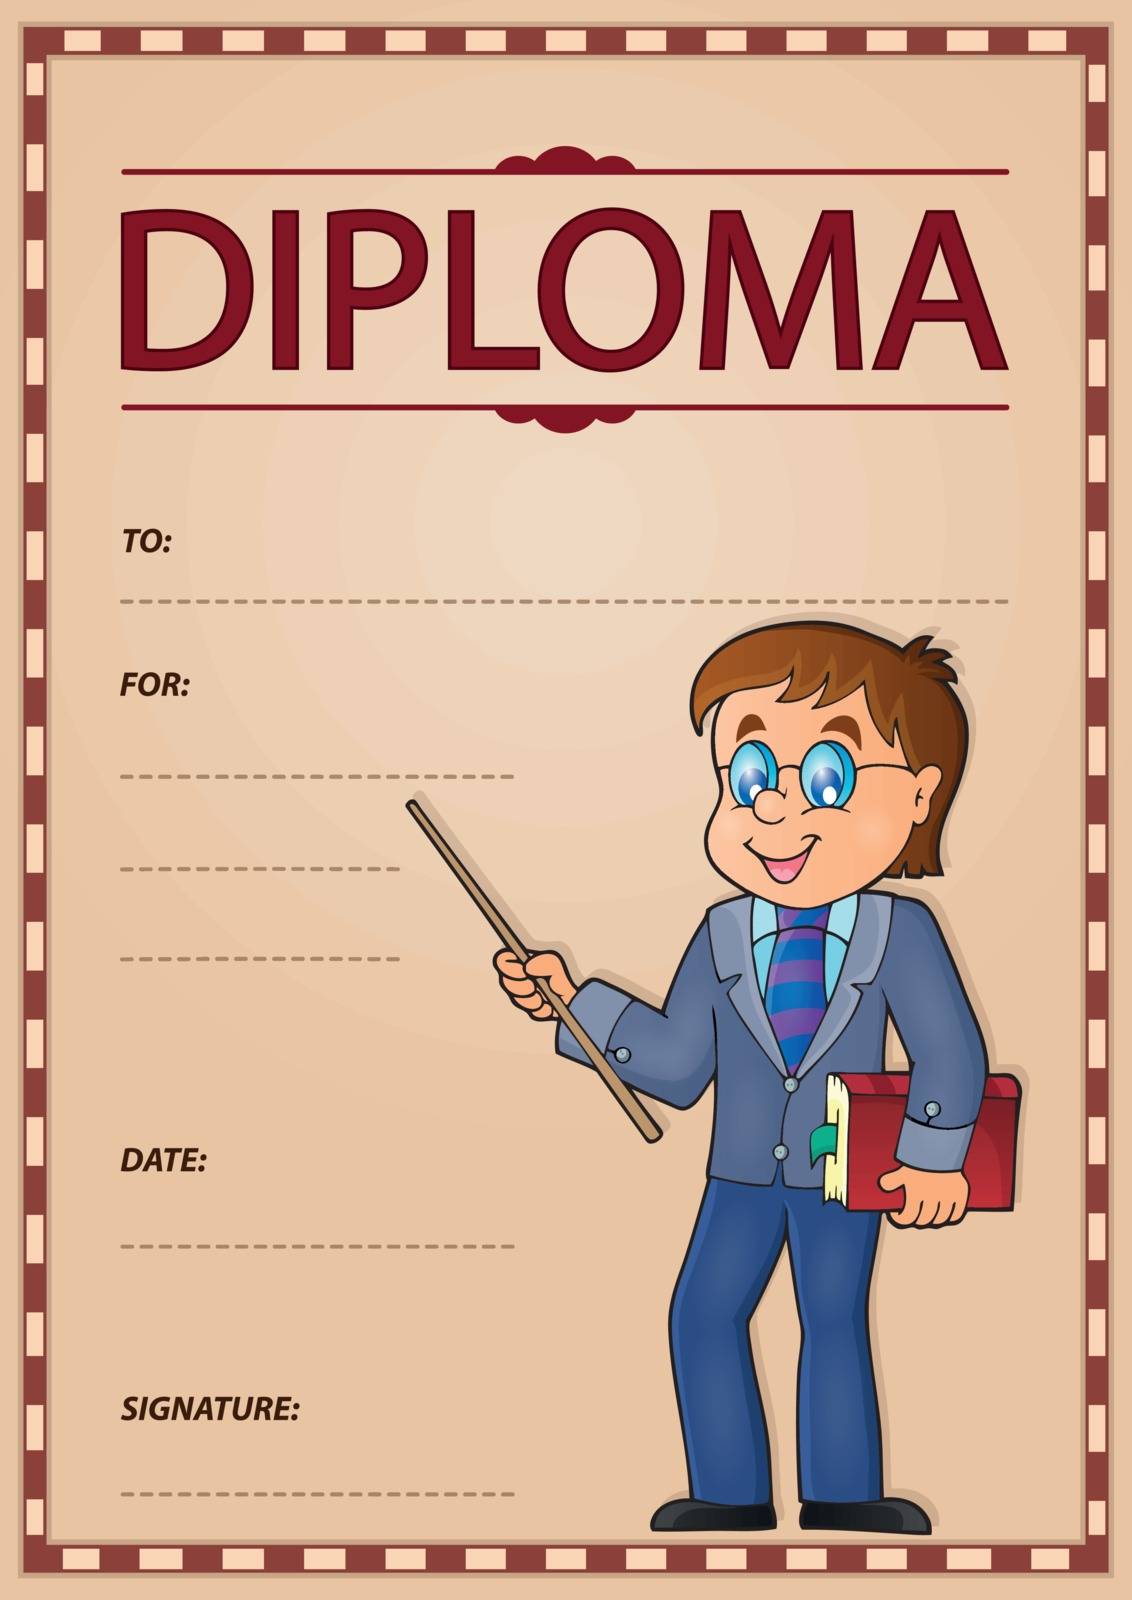 Diploma subject image 6 - eps10 vector illustration.